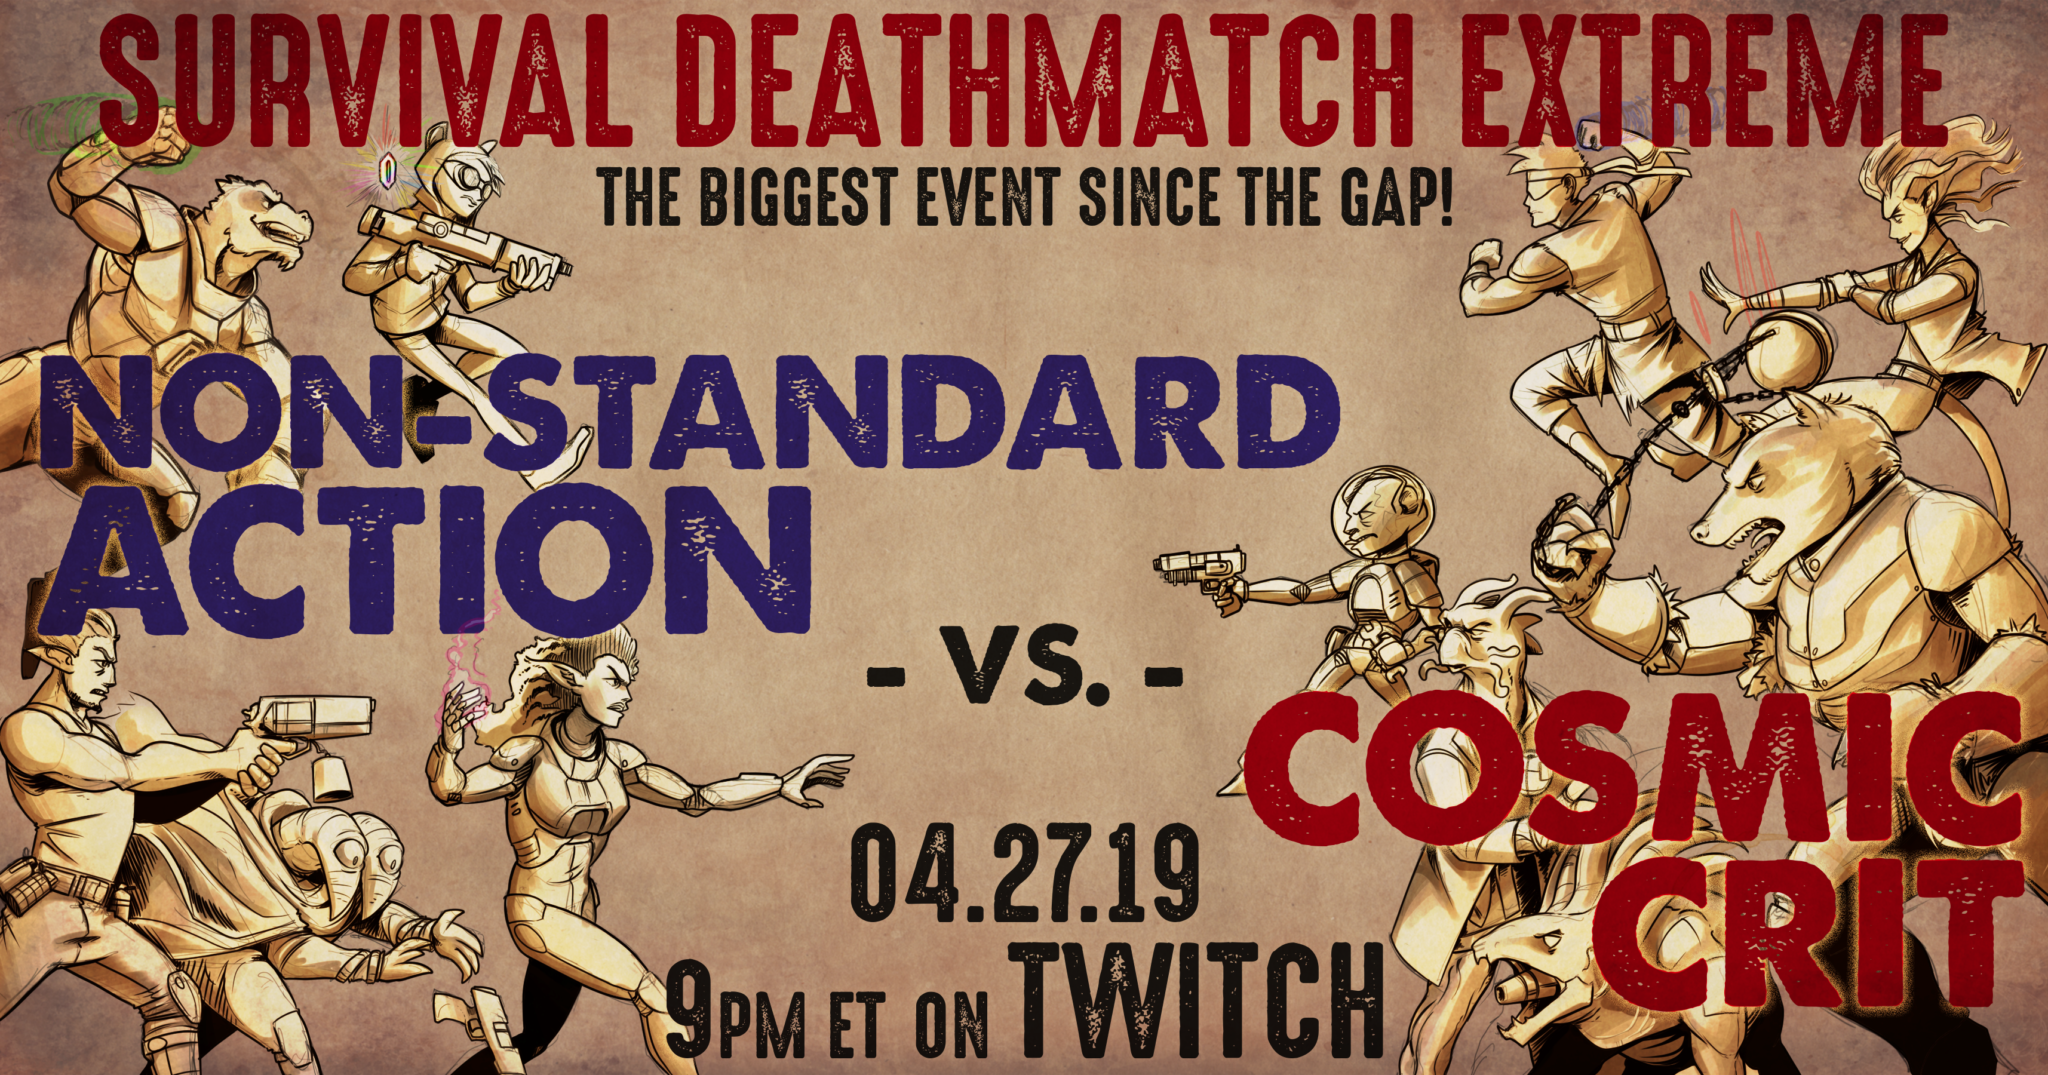 Crittercon 2 Survival Death Match Extreme, Cosmic Crit vs. Non-Standard Action